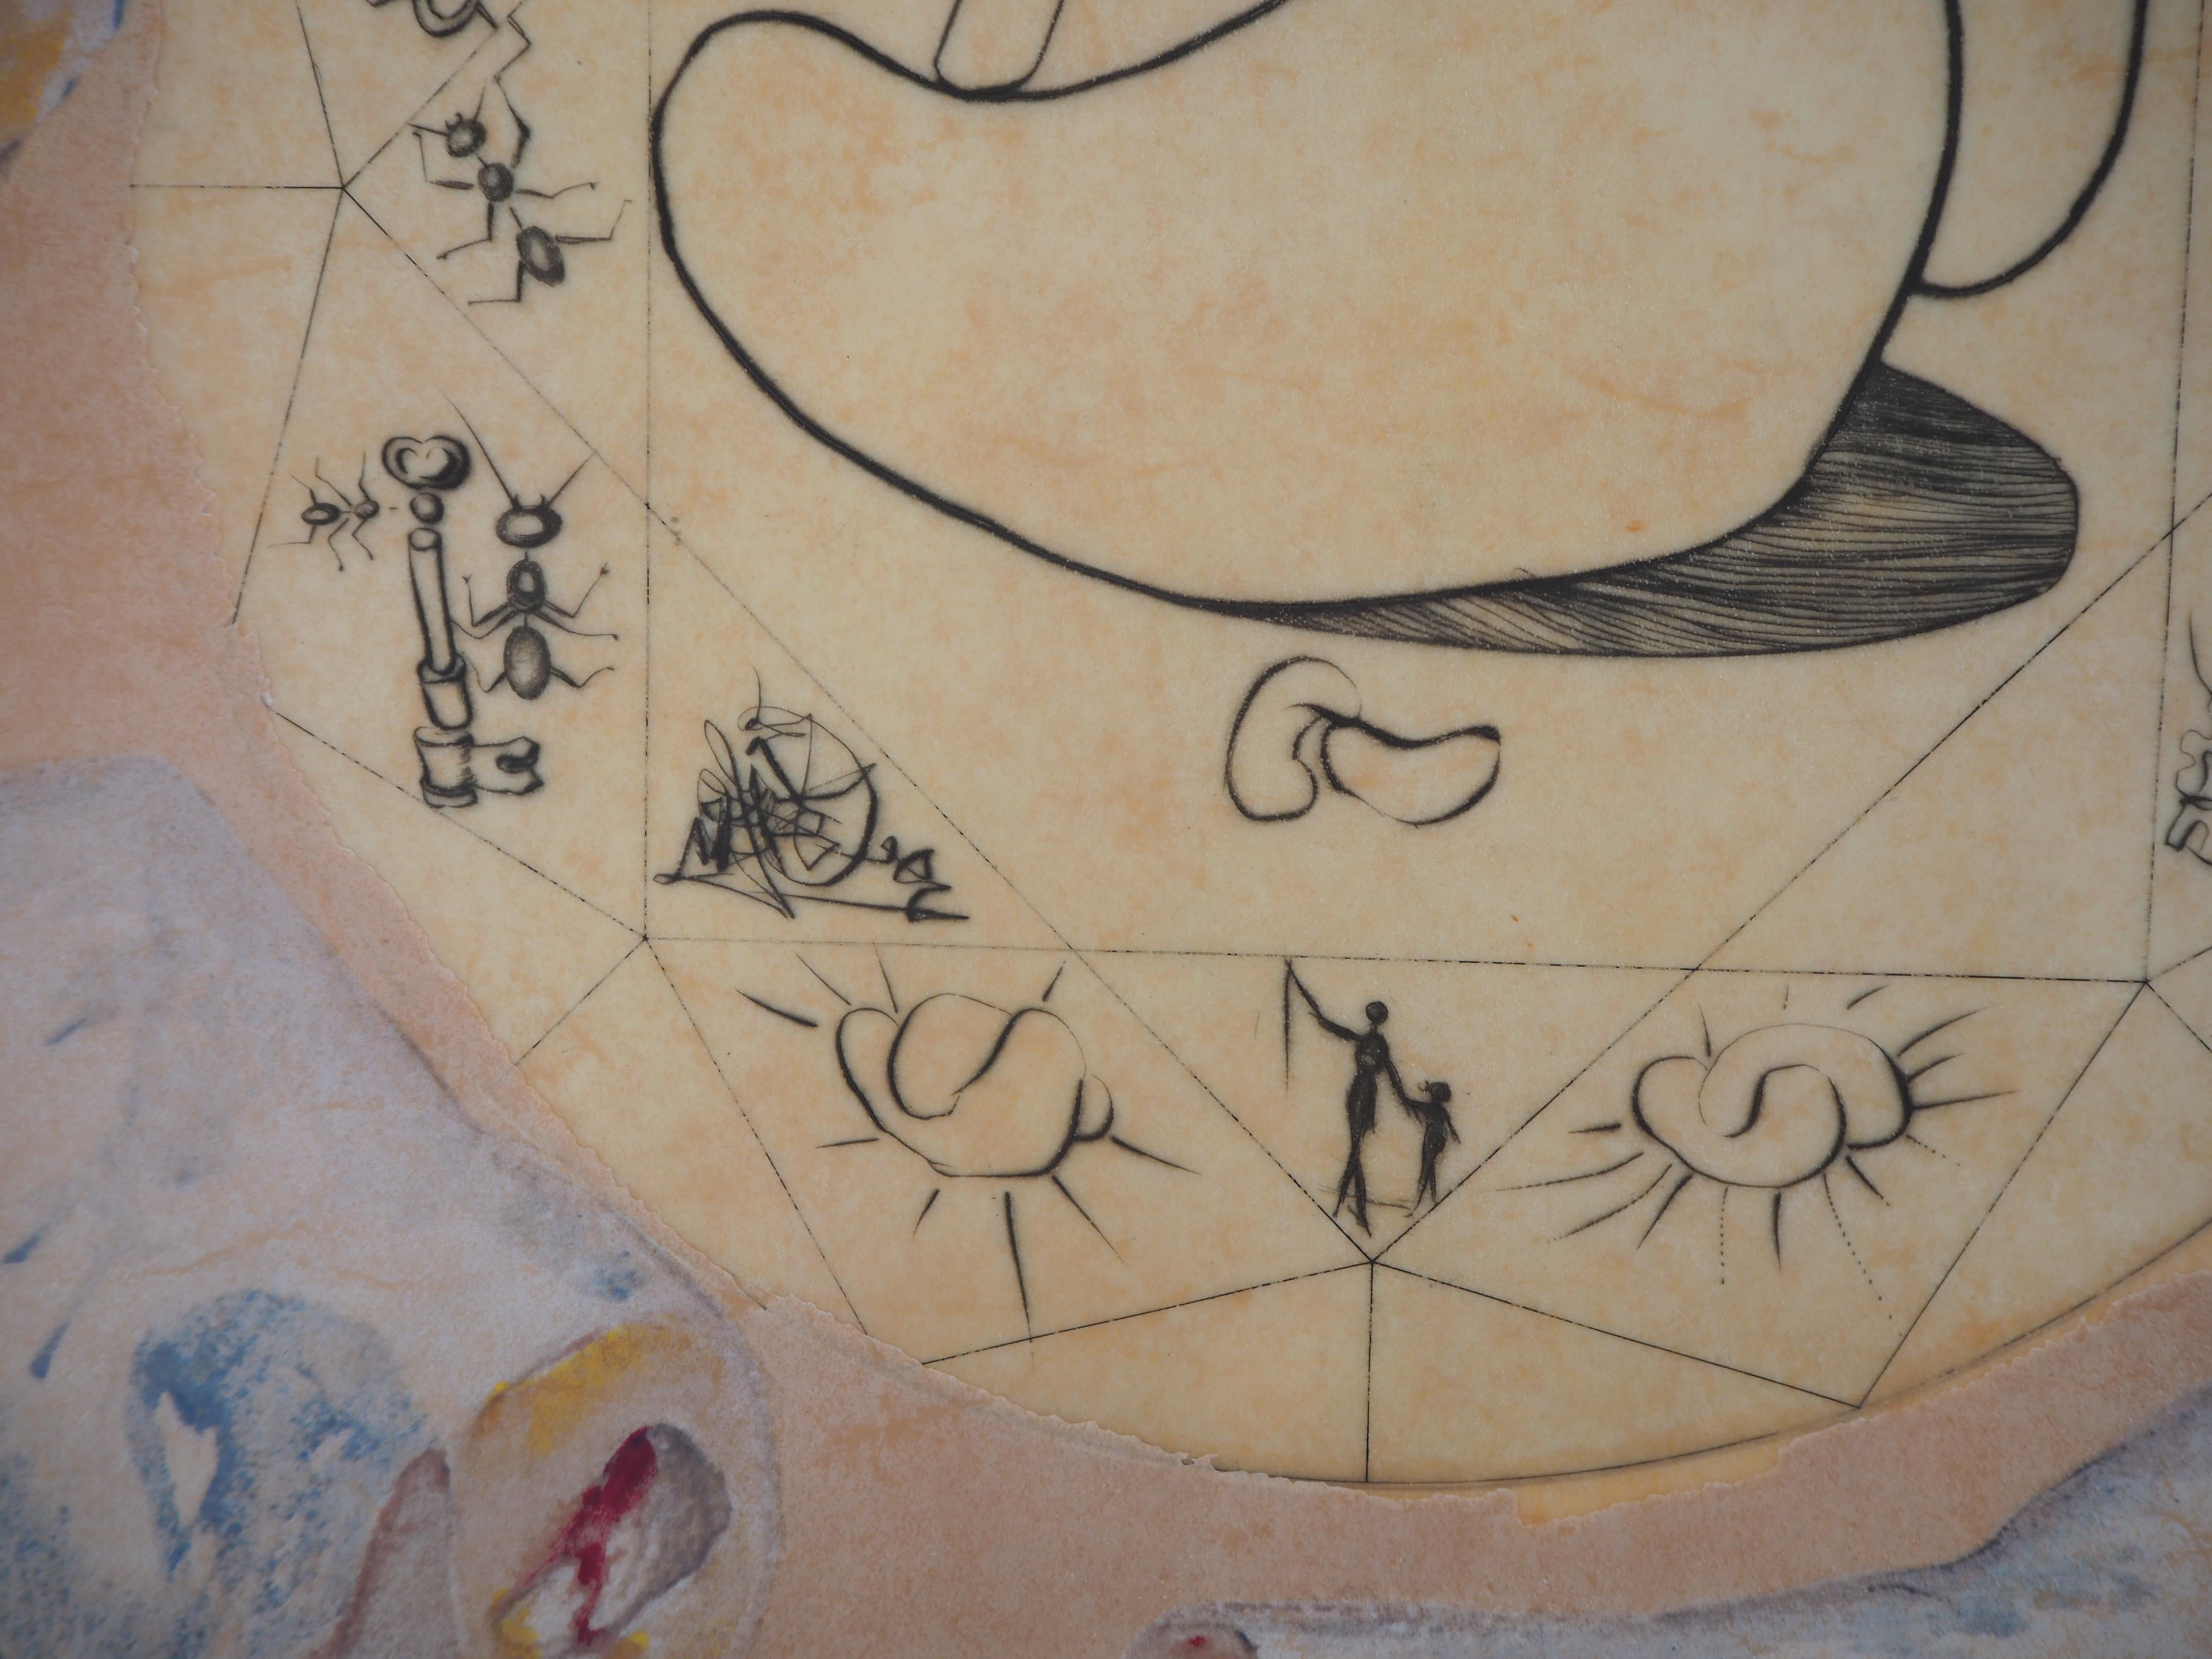 Alchemy : The Wheel (Ouroboros) - Original Lithograph, Handsigned (Field #75-12) - Surrealist Print by Salvador Dalí